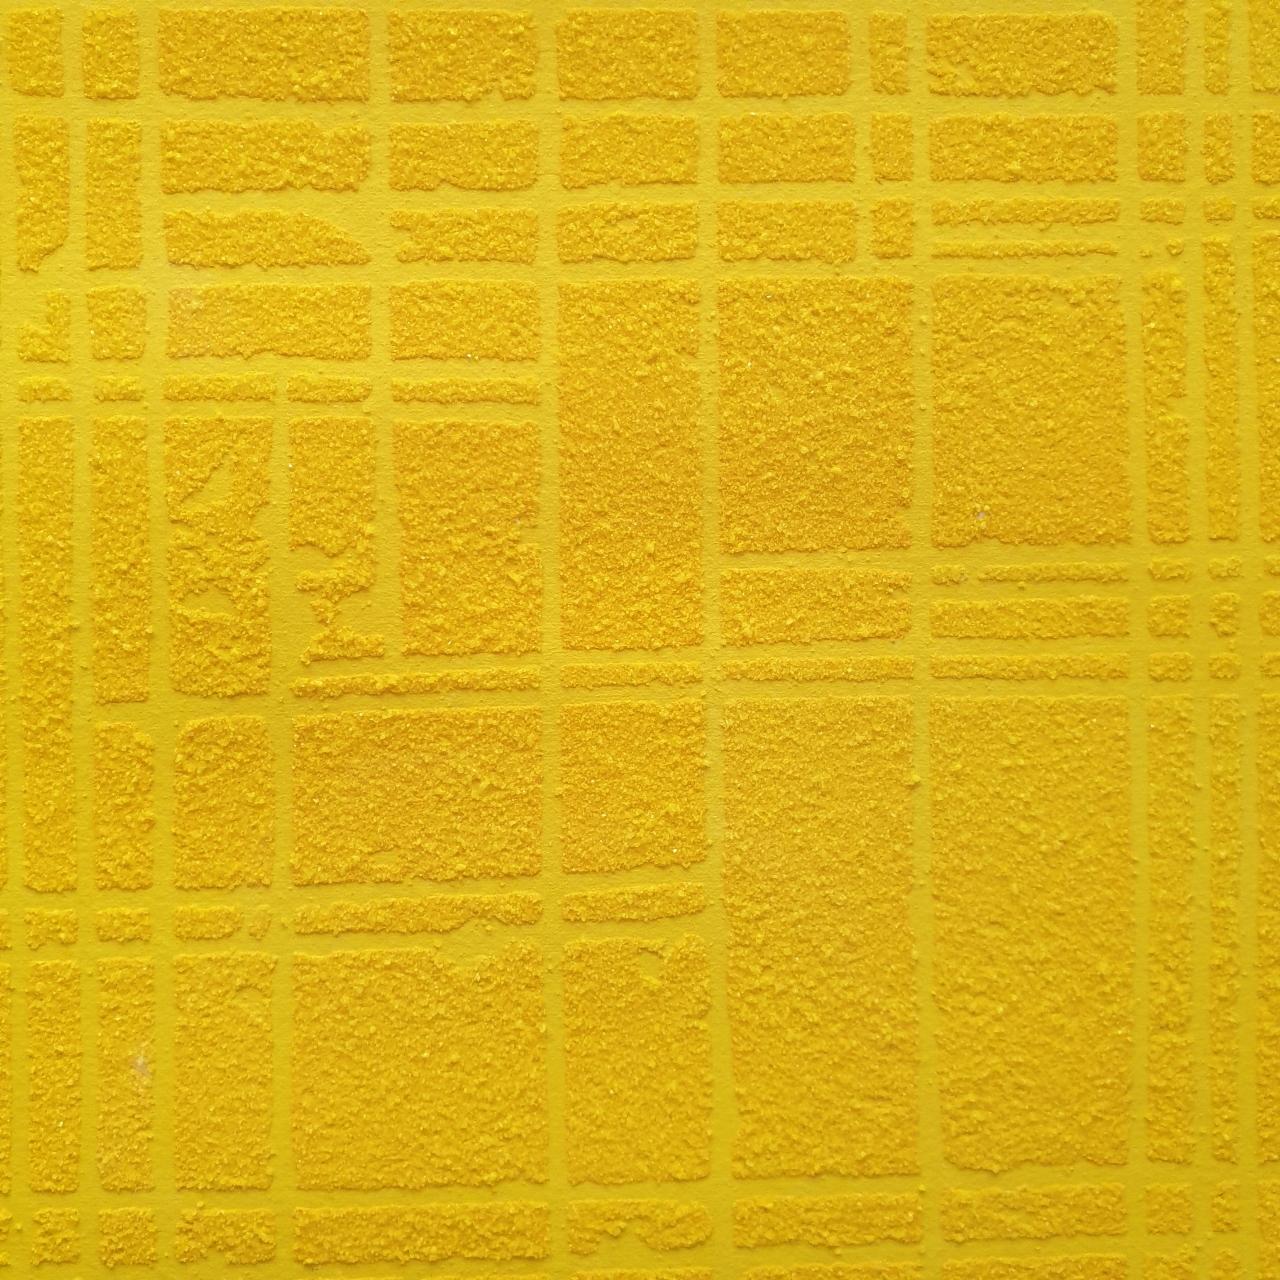 o.T. gelb - contemporary modern abstract geometric stone cut monotype print - Orange Abstract Print by Dieter Kränzlein